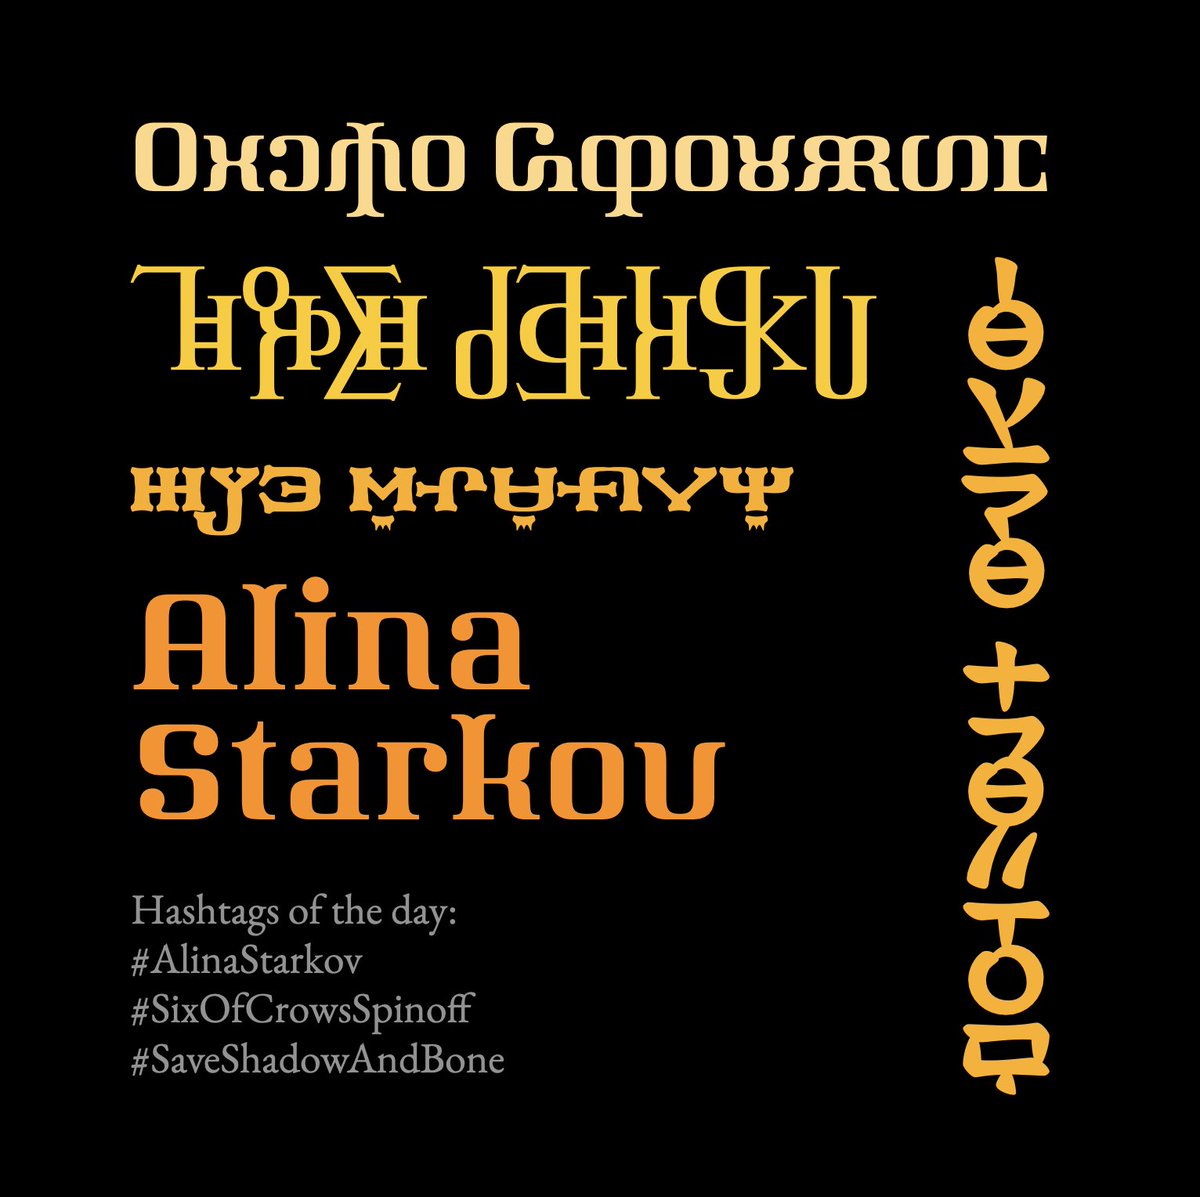 Hashtags of the day:
#AlinaStarkov
#SaveShadowAndBone 
#SixOfCrowsSpinoff 
@netflix